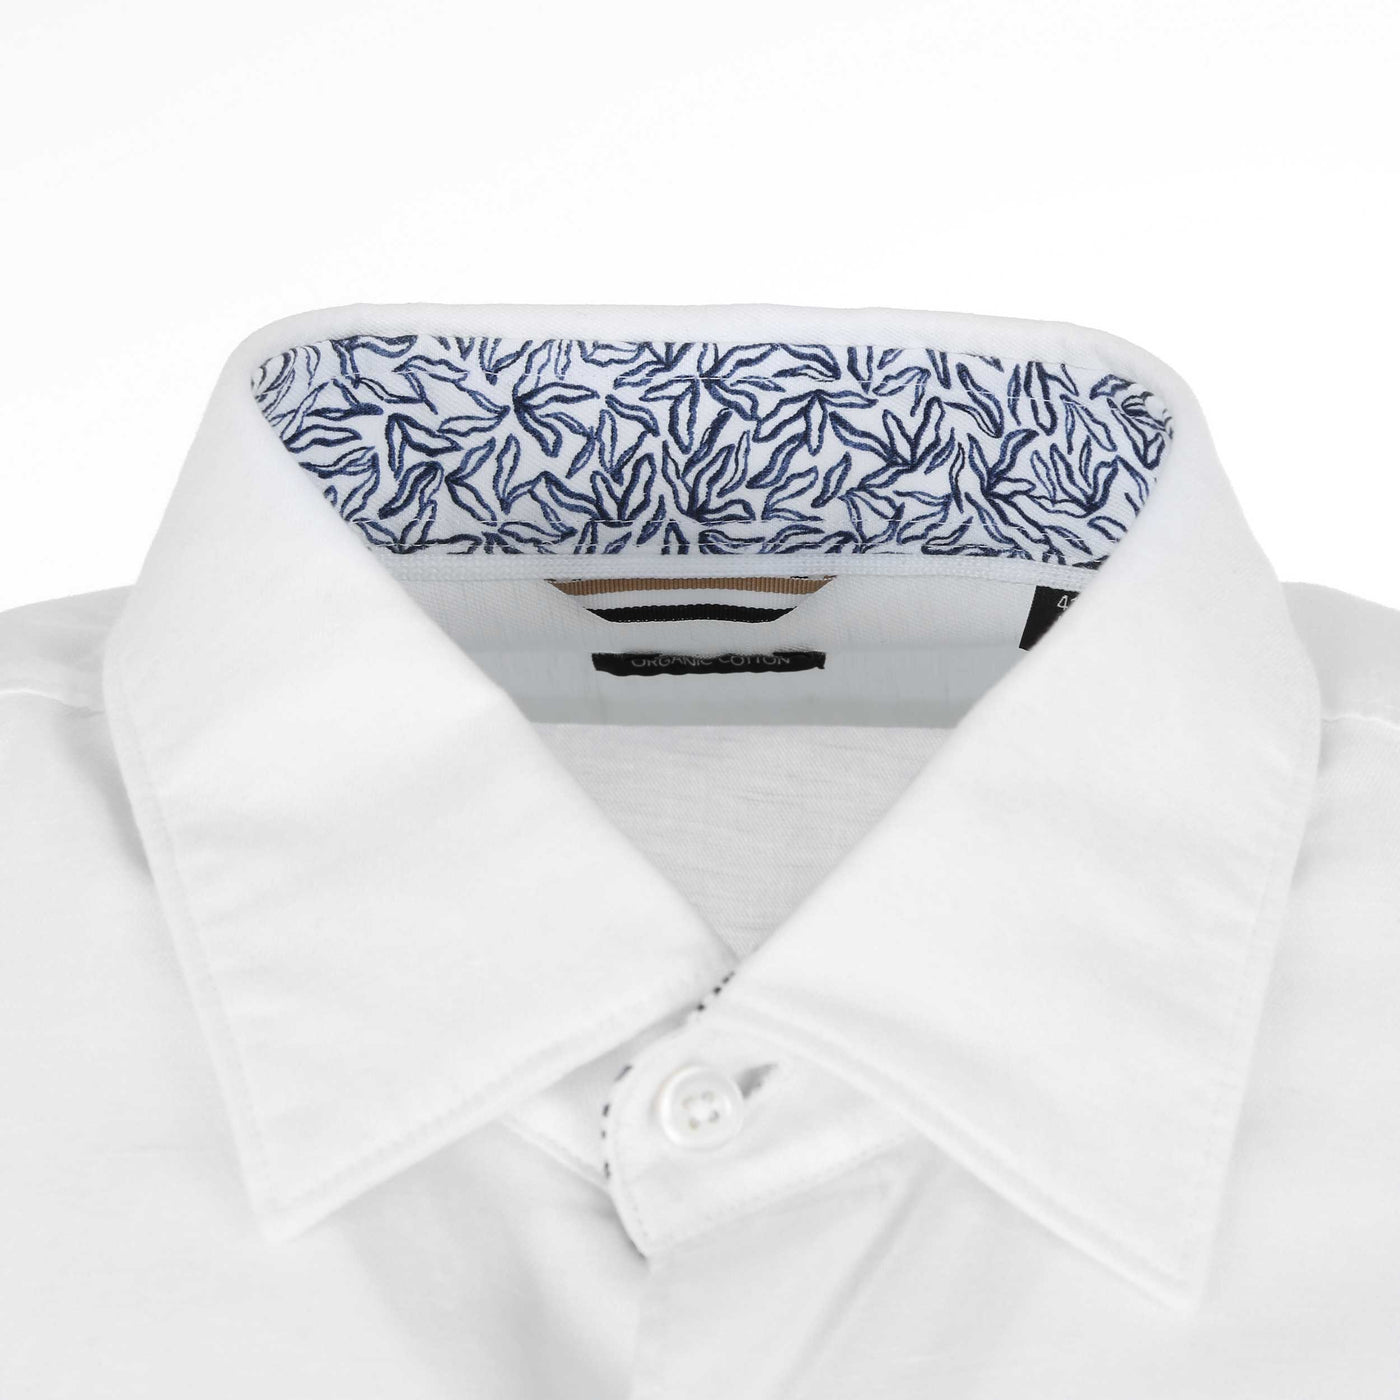 BOSS C-Hank-soft Shirt in White